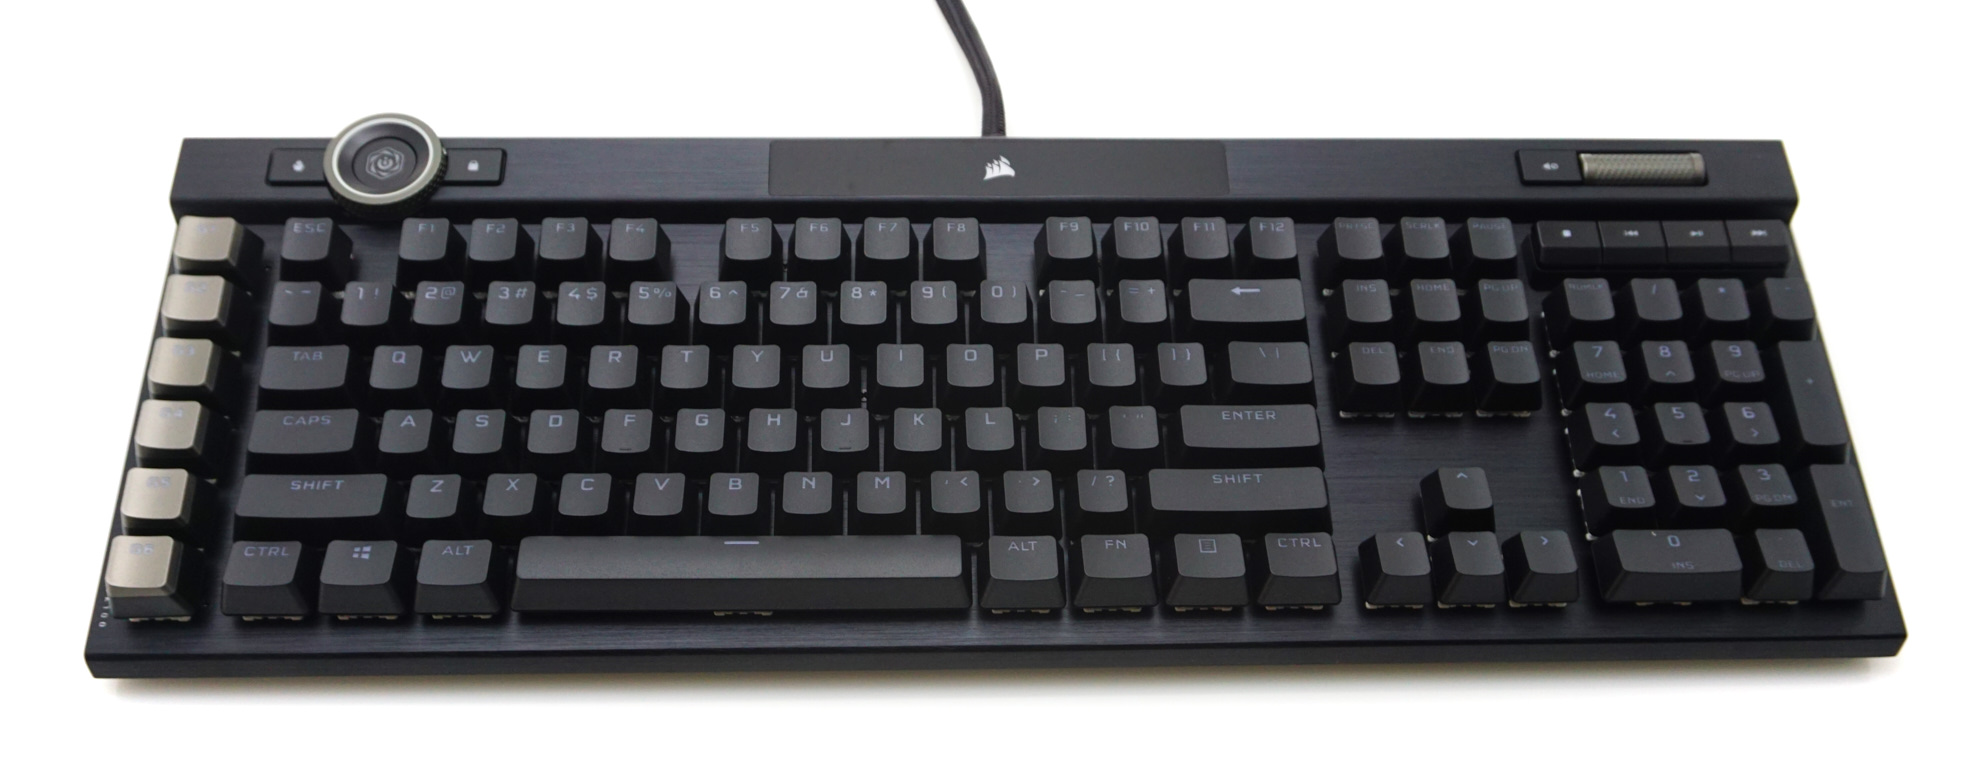 Corsair K100 Rgb Mechanical Gaming Keyboard - Cherry Mx Speed Rgb